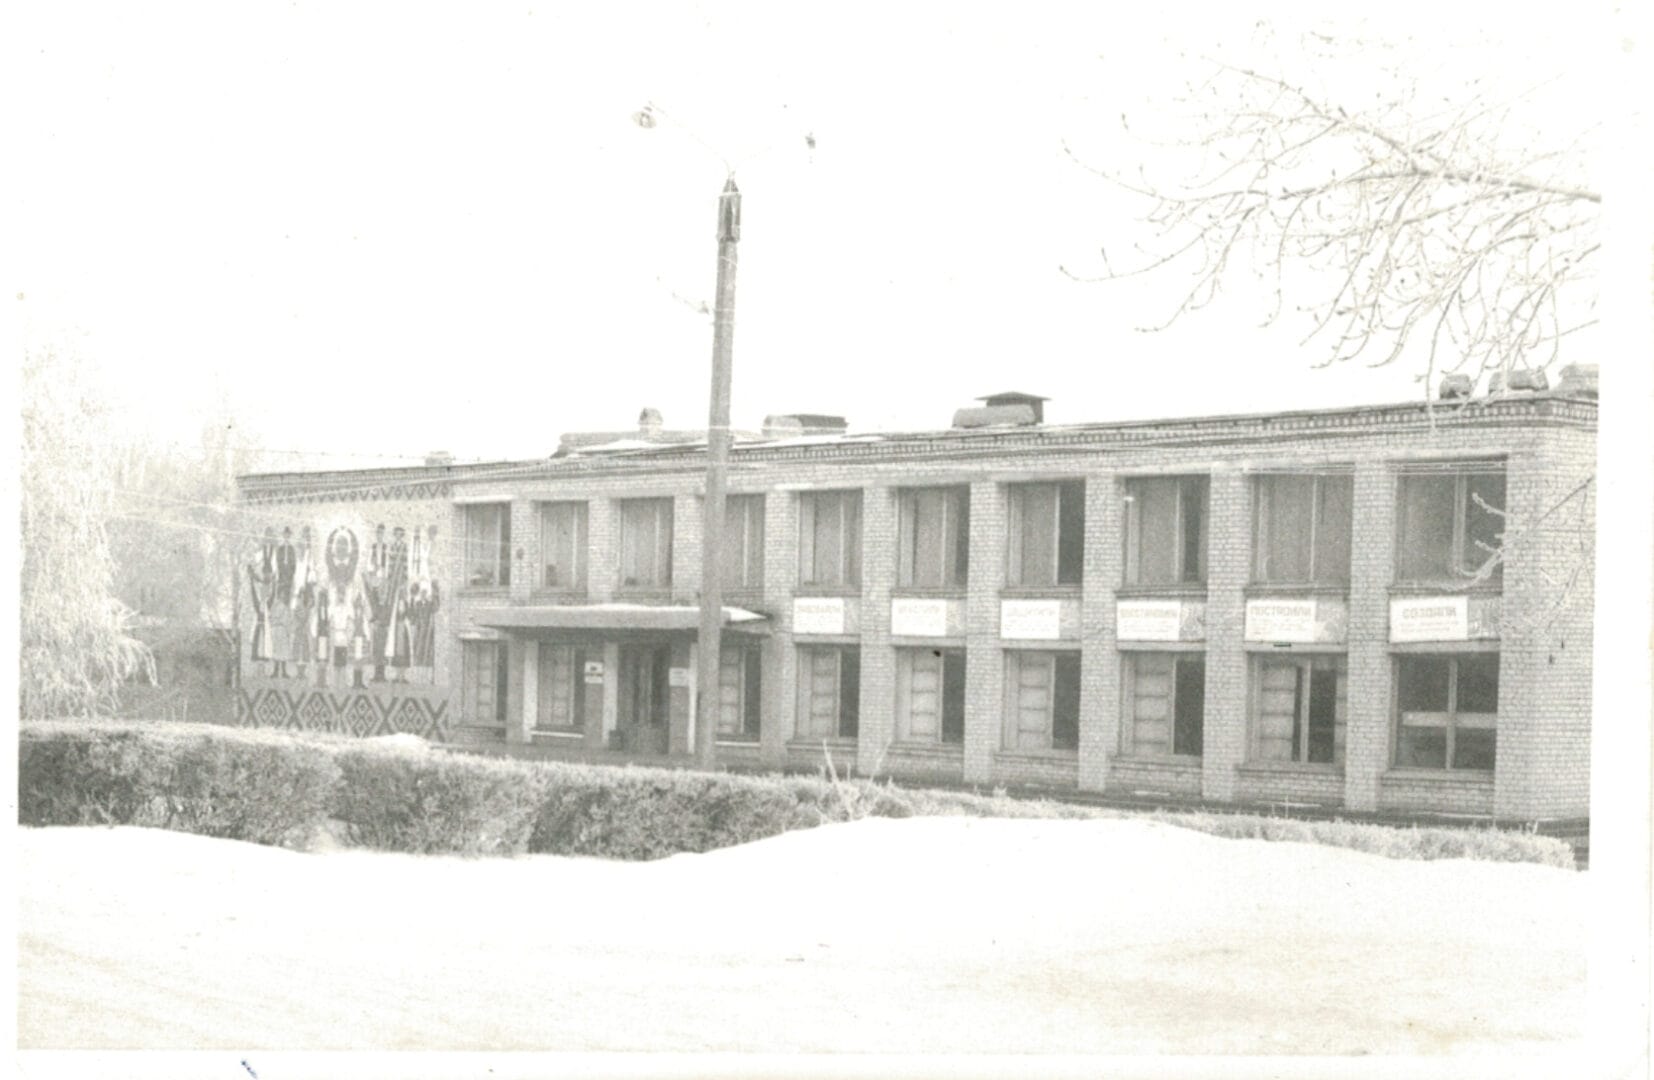 The Sofiivka Center of Culture